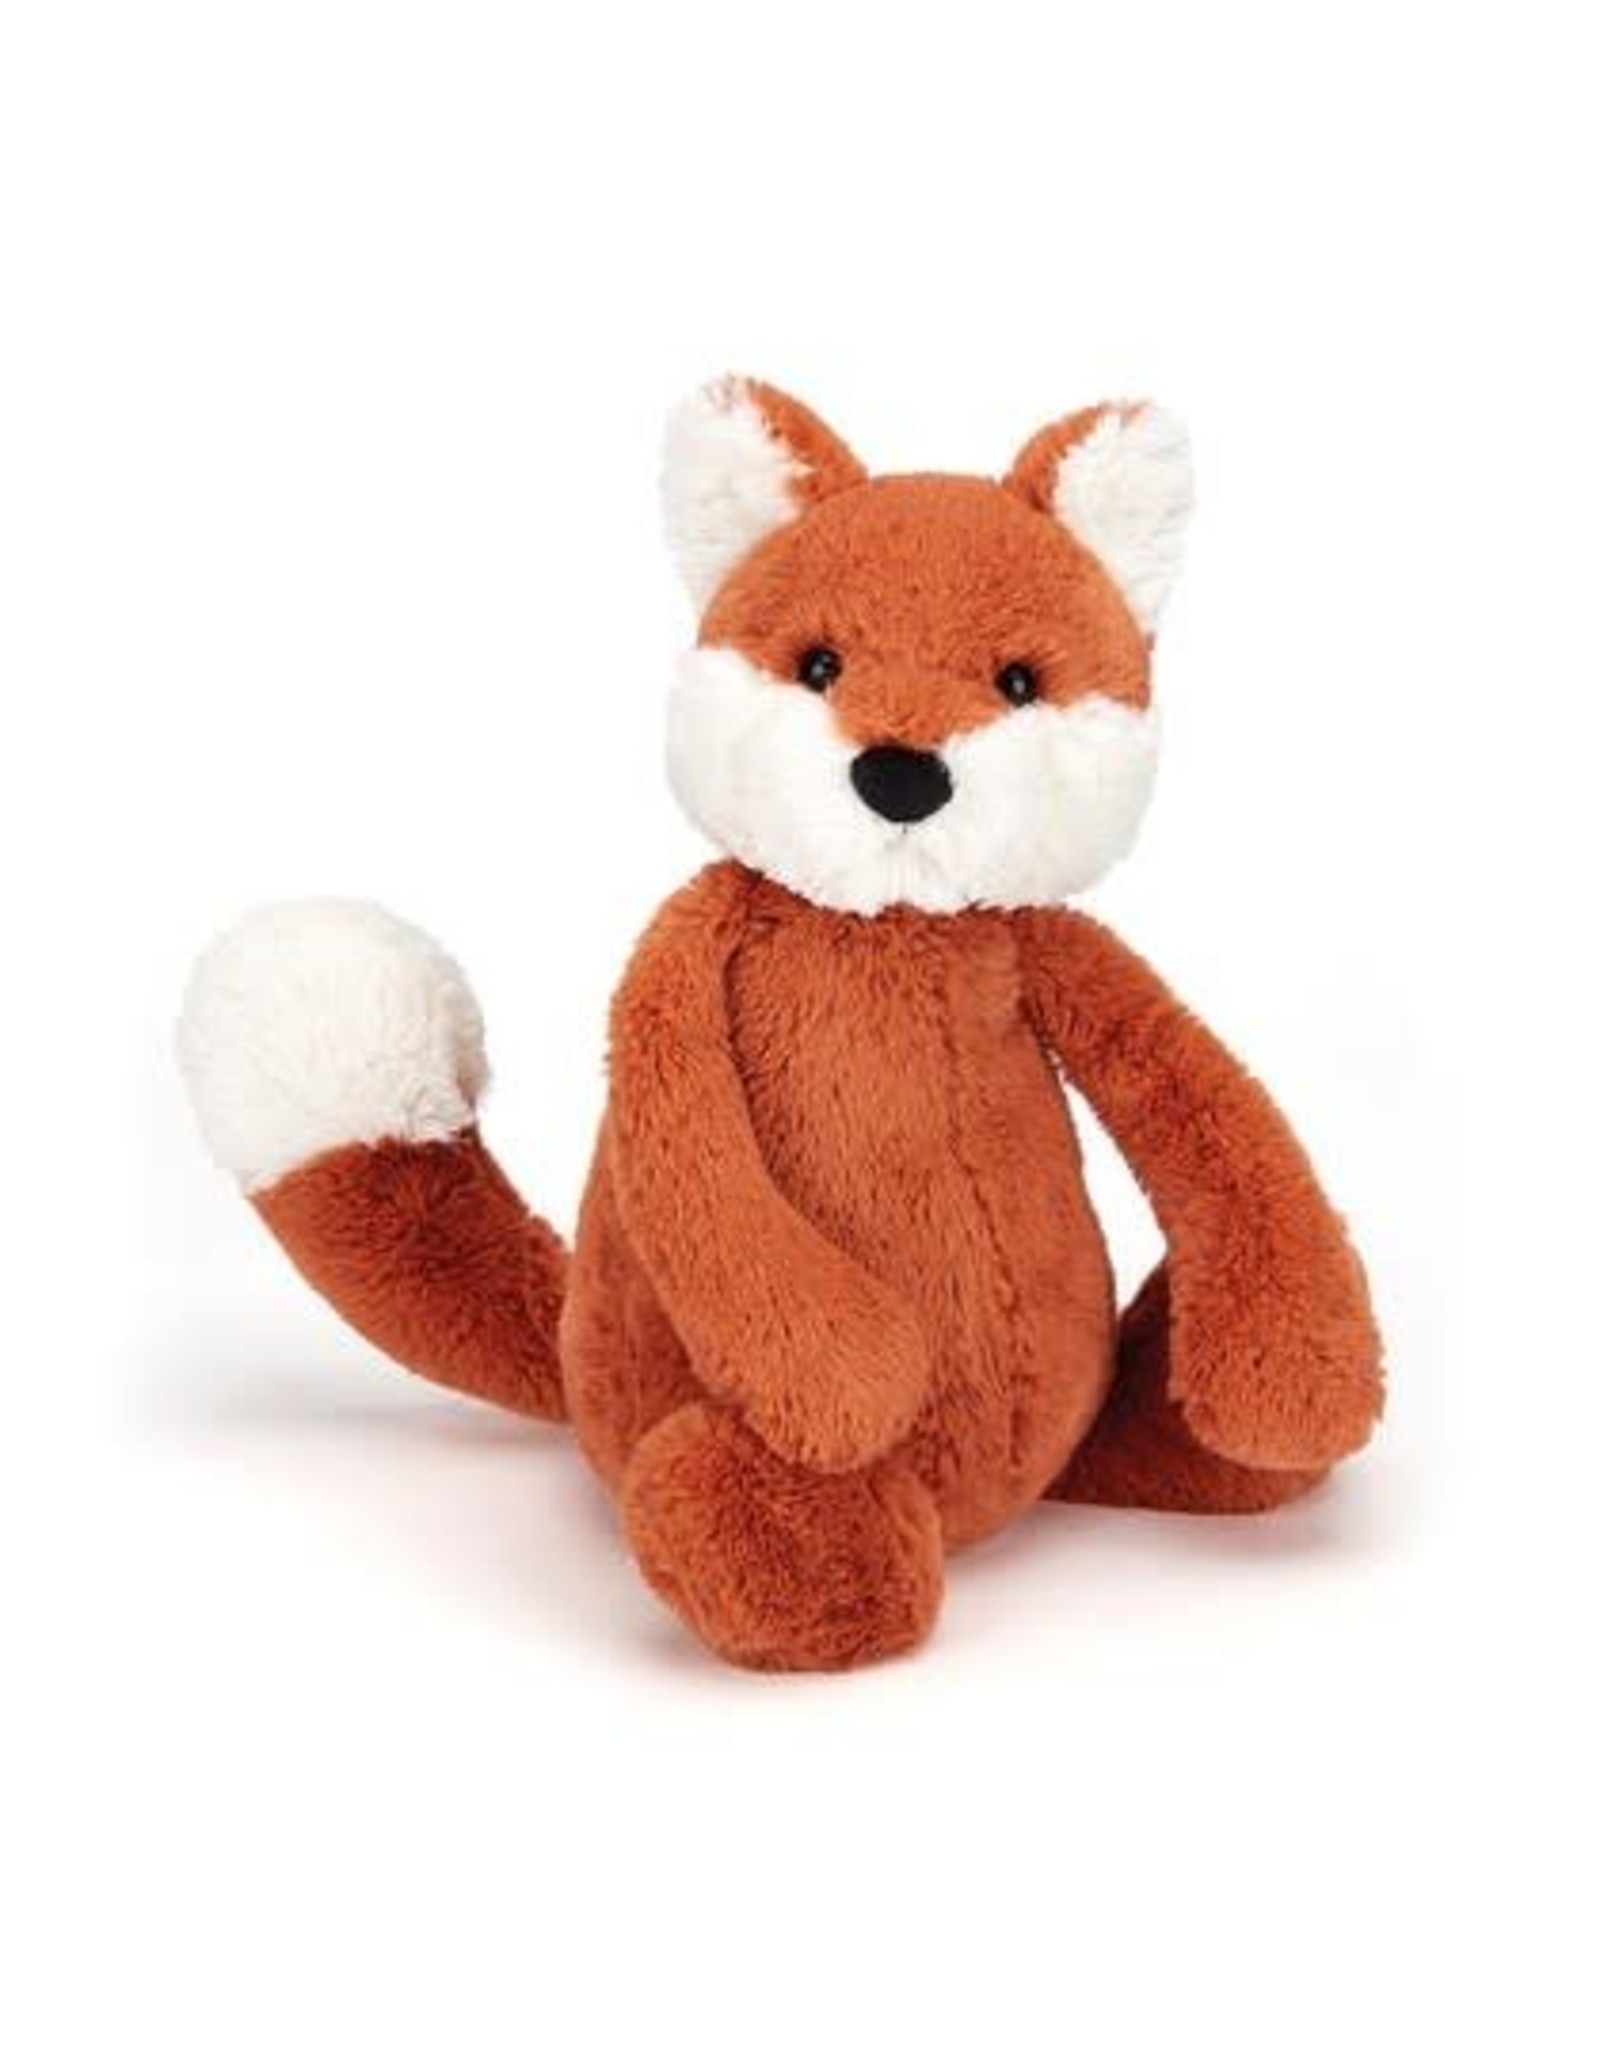 Jellycat Bashful Fox Cub Medium